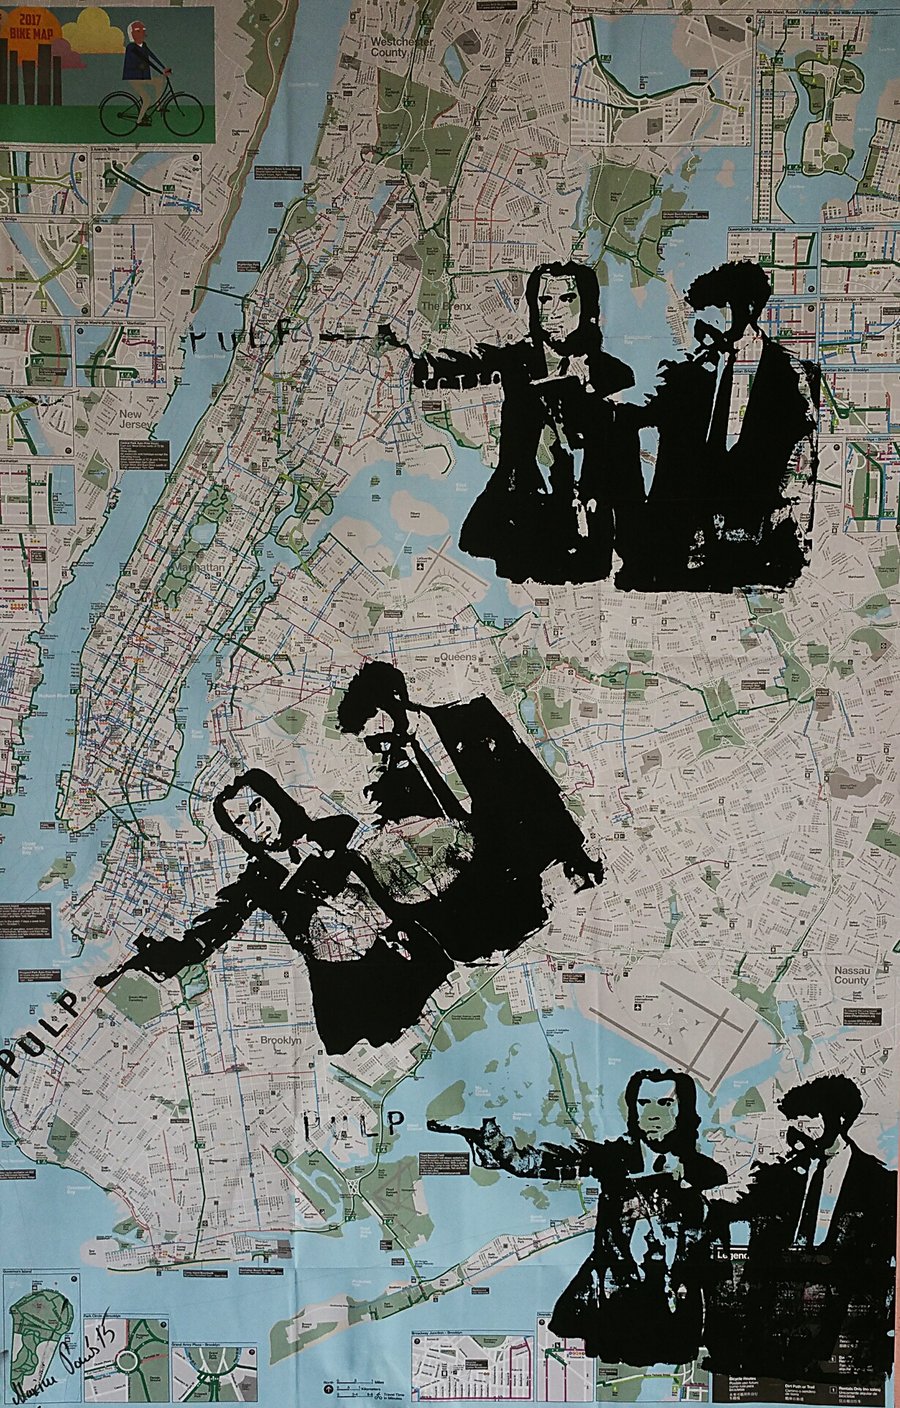 Image of Original silk screen: "Pulp Fiction". Artwork on New York City Bike and Subway Maps.